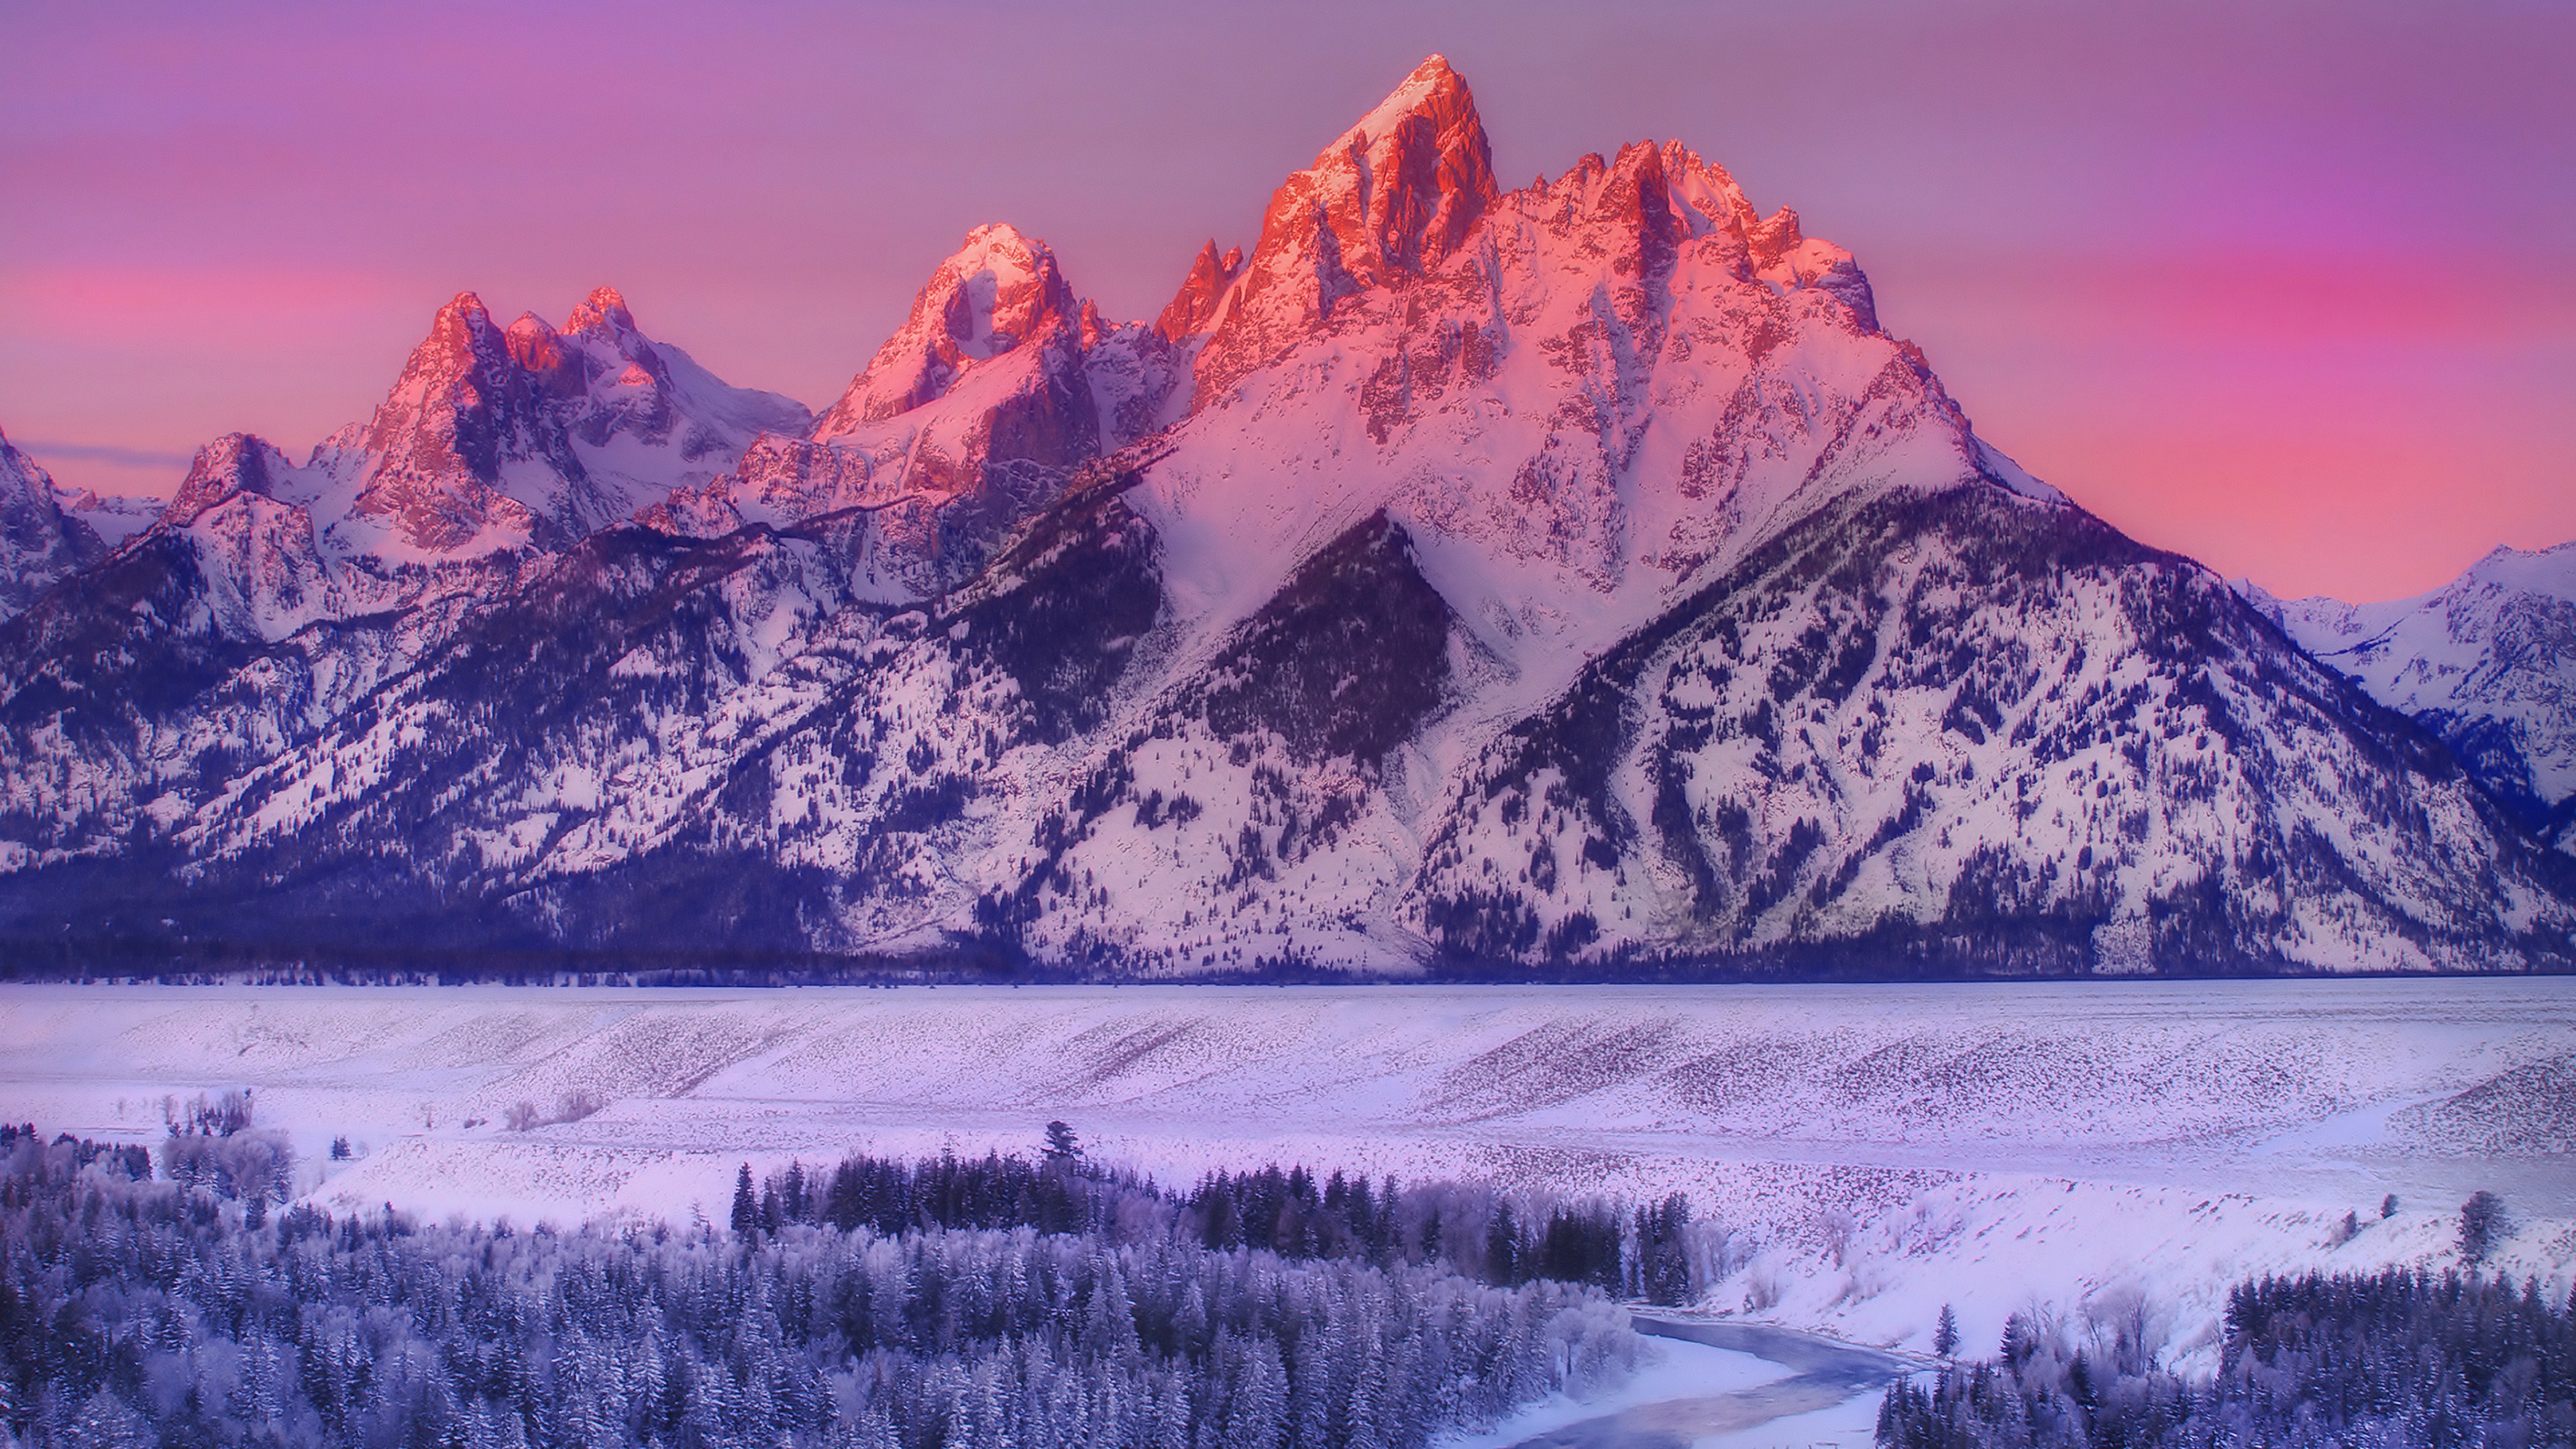 Mountain 4k Ultra HD Wallpaper | Background Image | 3840x2160 | ID